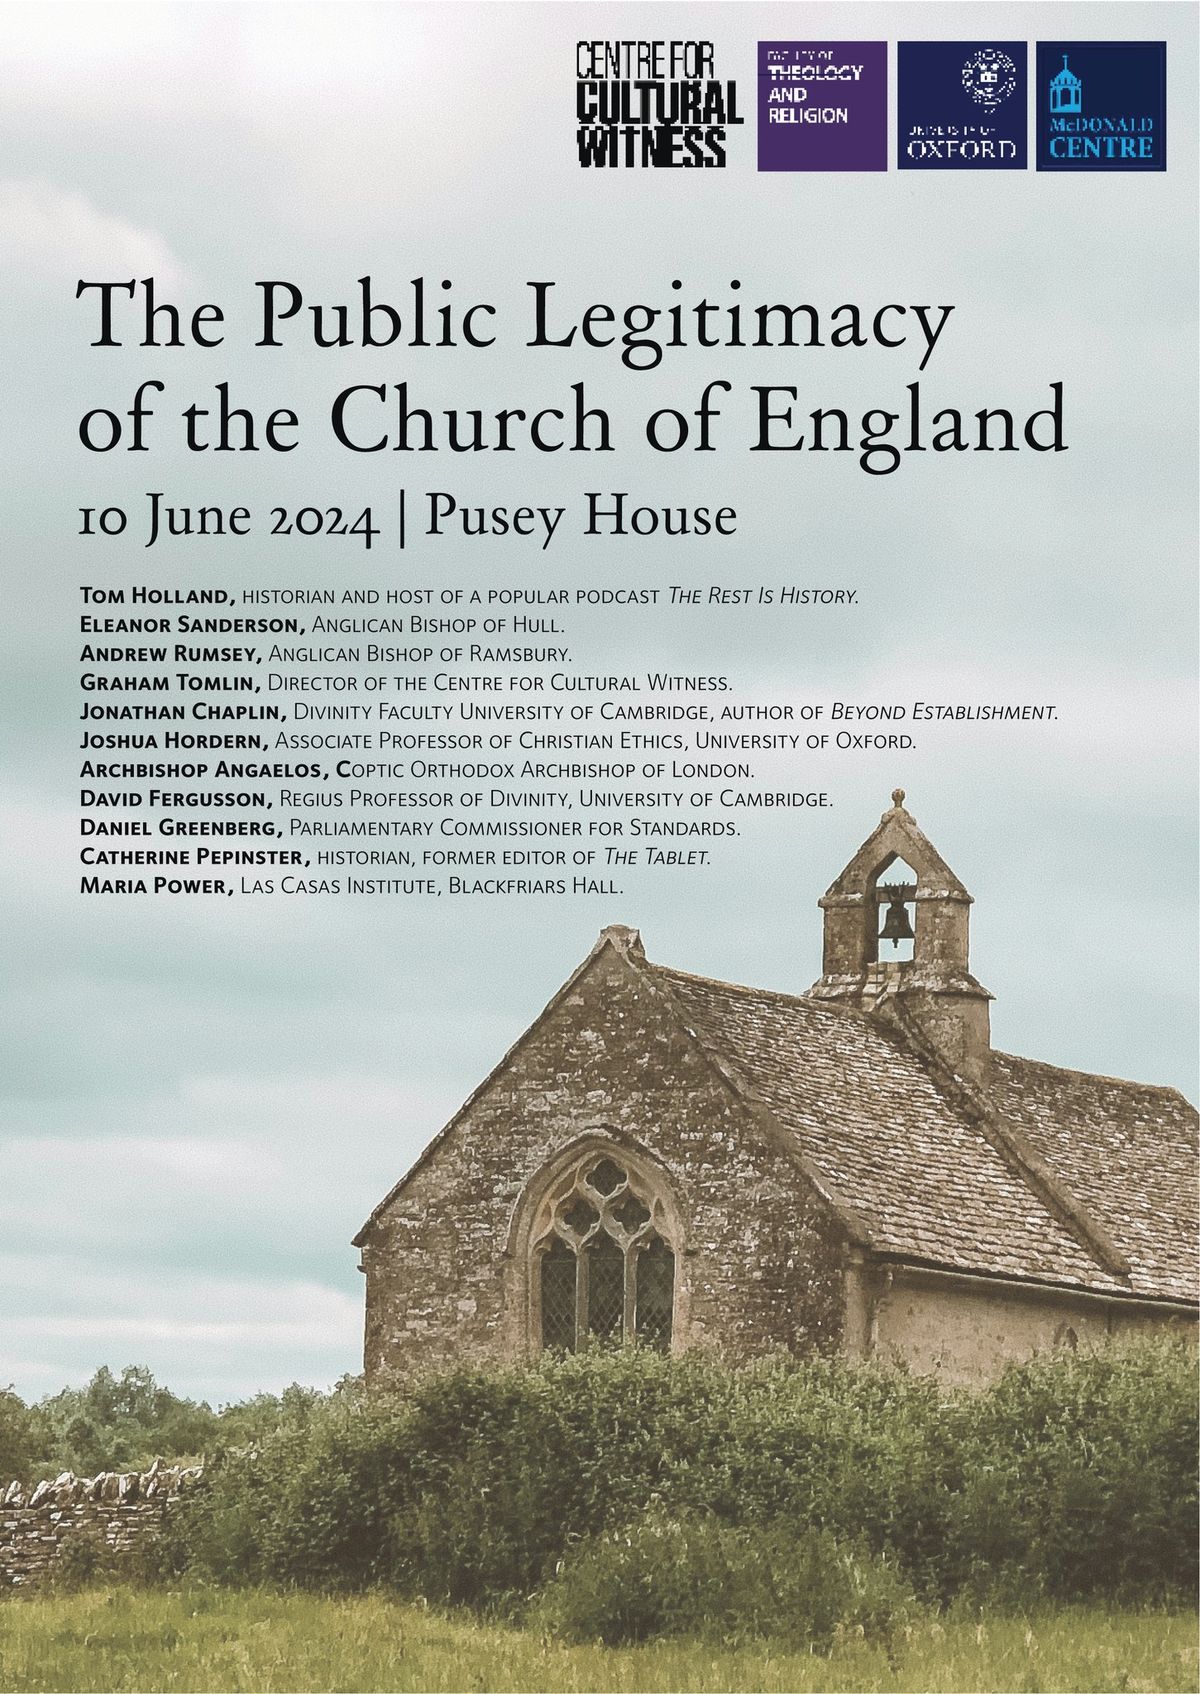 The Public Legitimacy of the Church of England